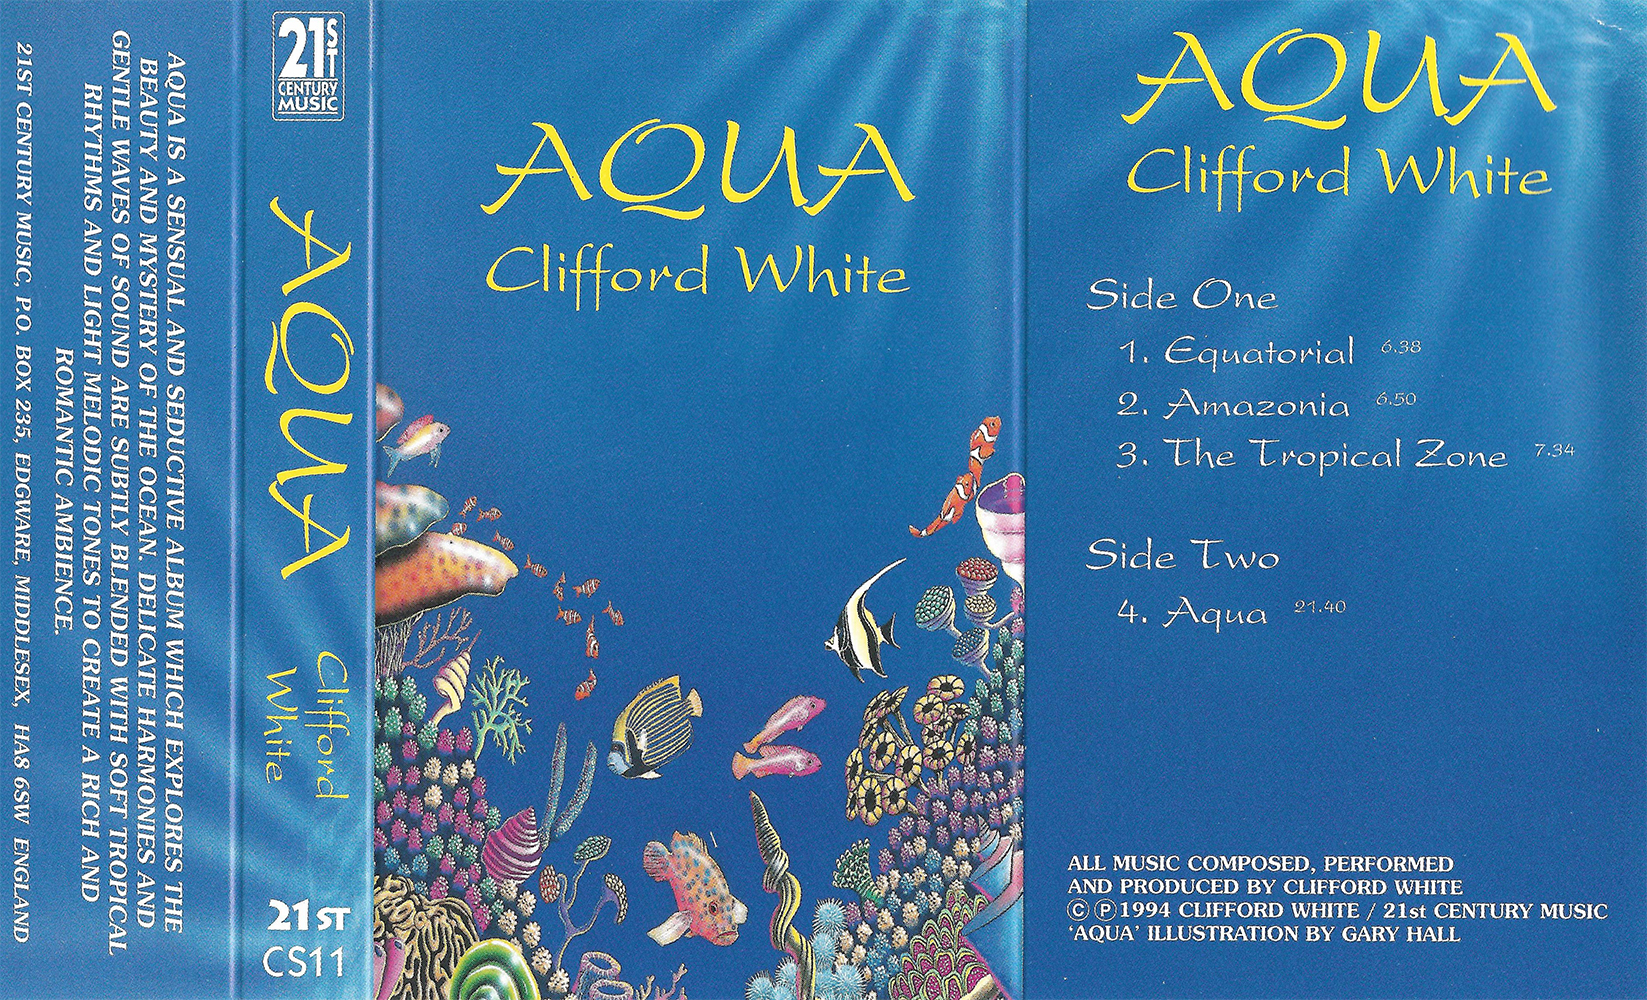 Aqua by Clifford White